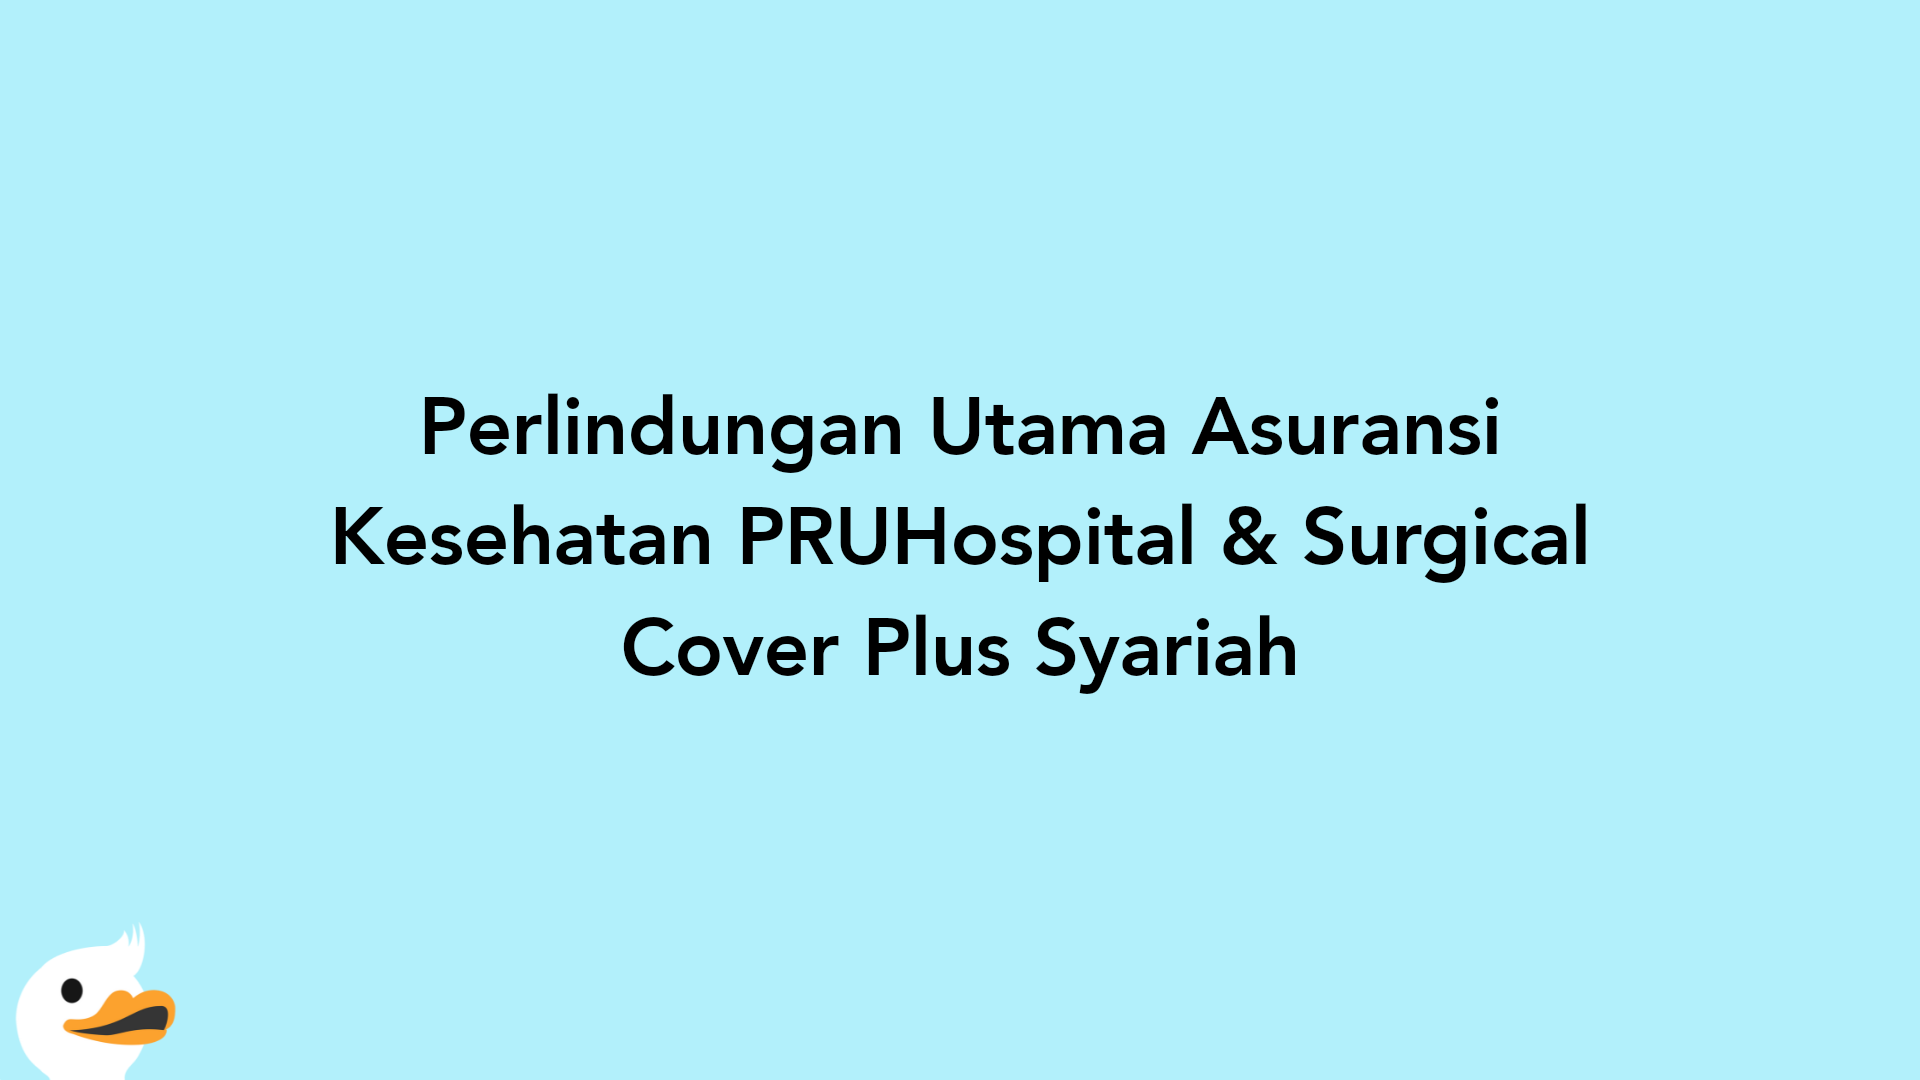 Perlindungan Utama Asuransi Kesehatan PRUHospital & Surgical Cover Plus Syariah